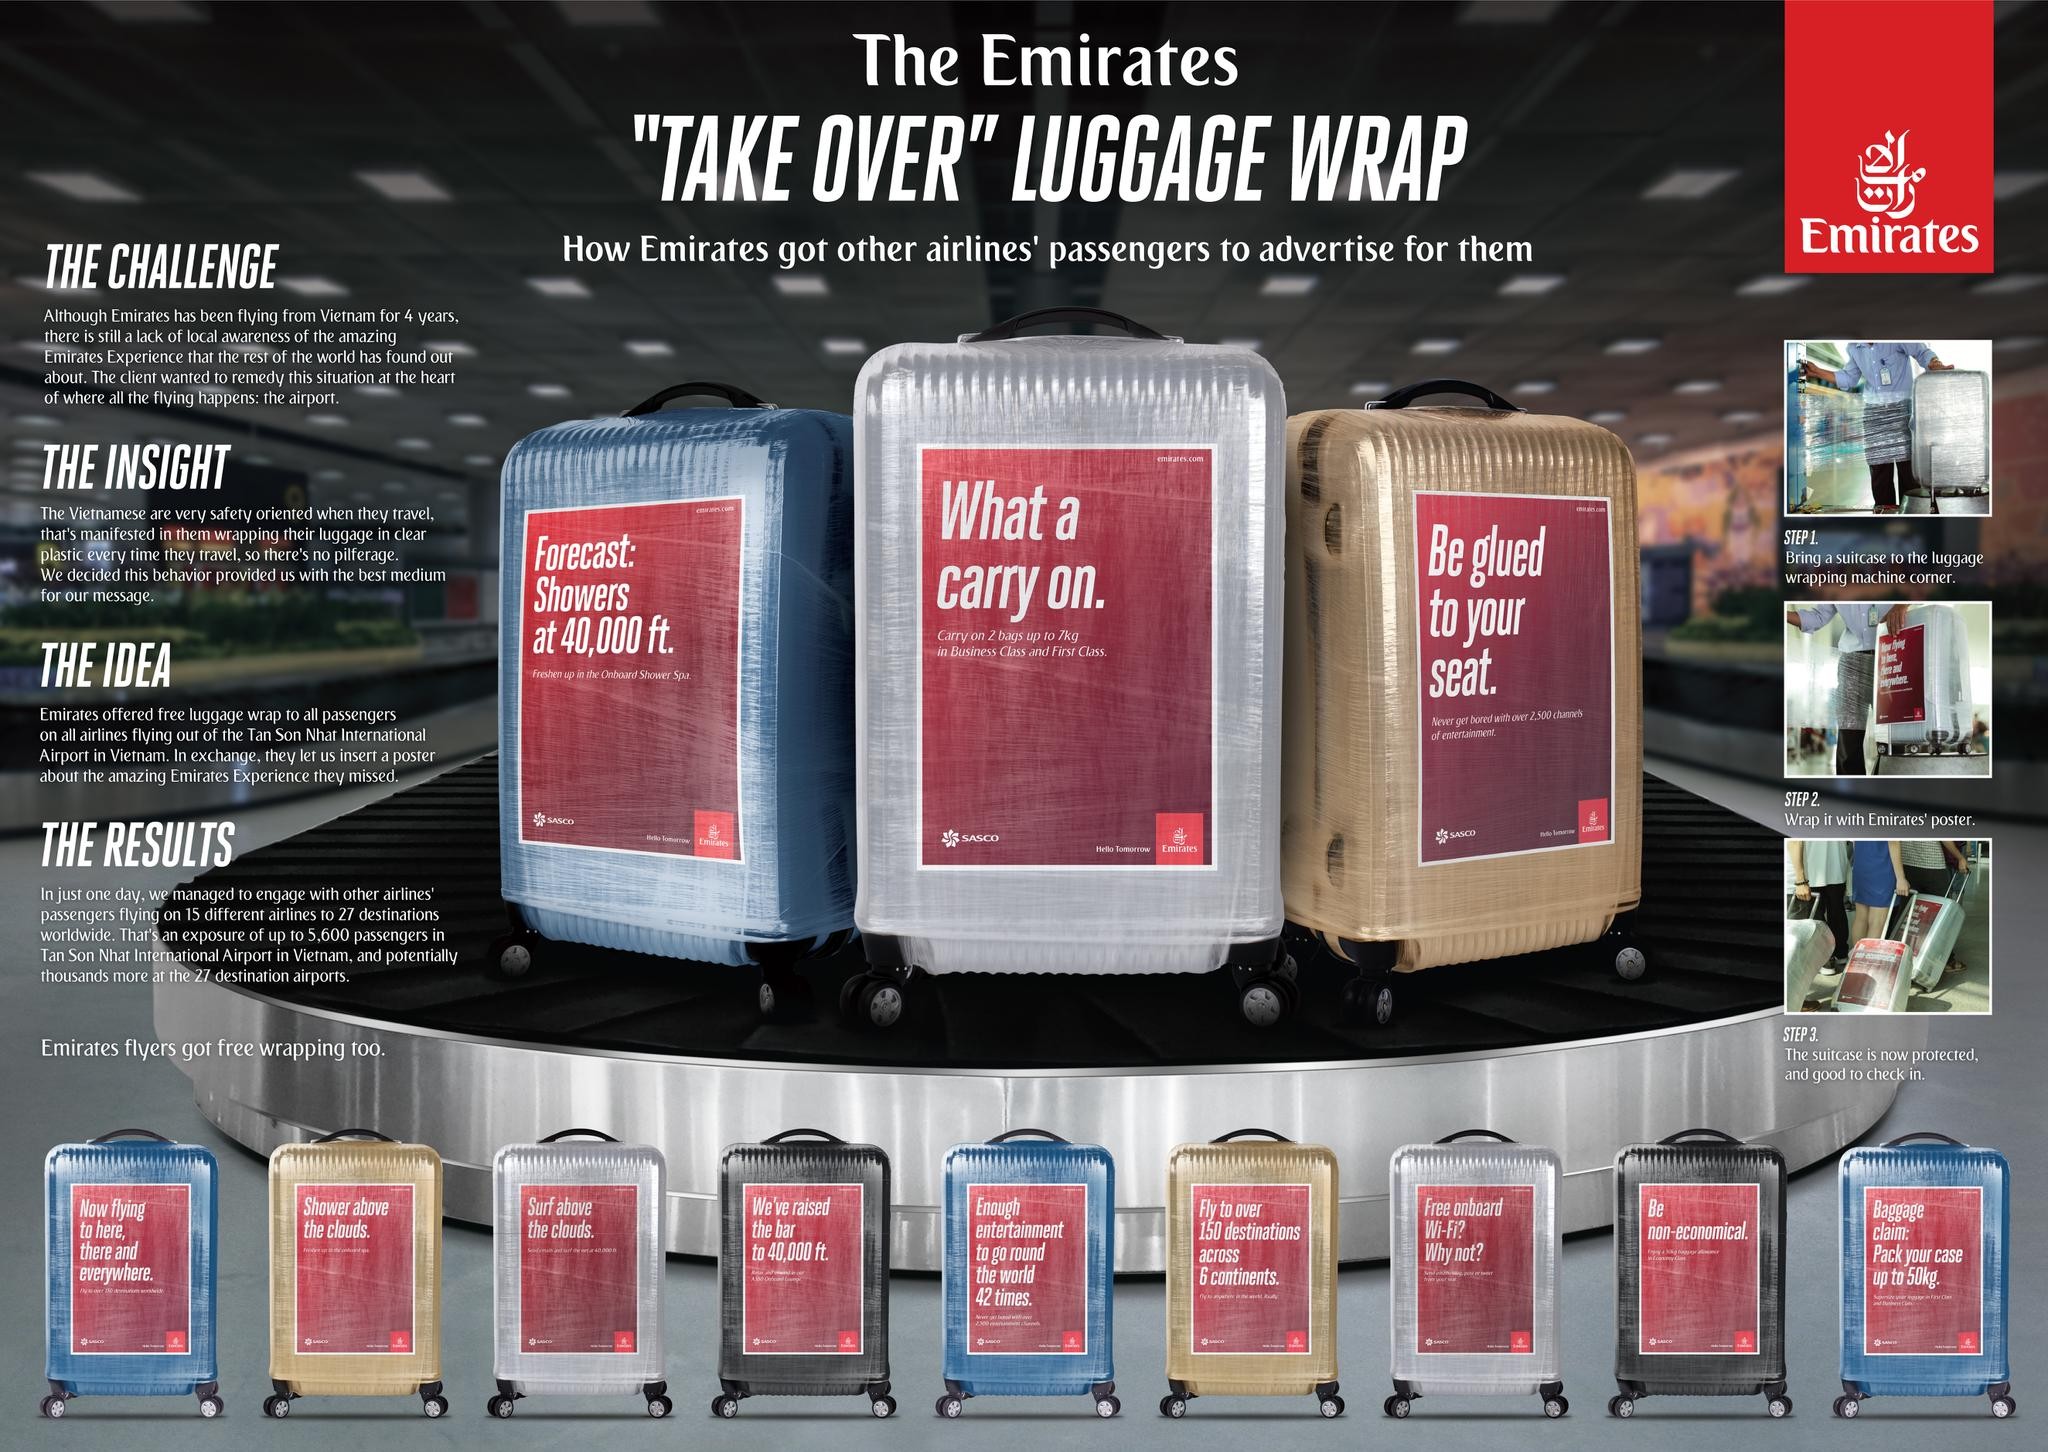 The Emirates "Take Over" Luggage Wrap